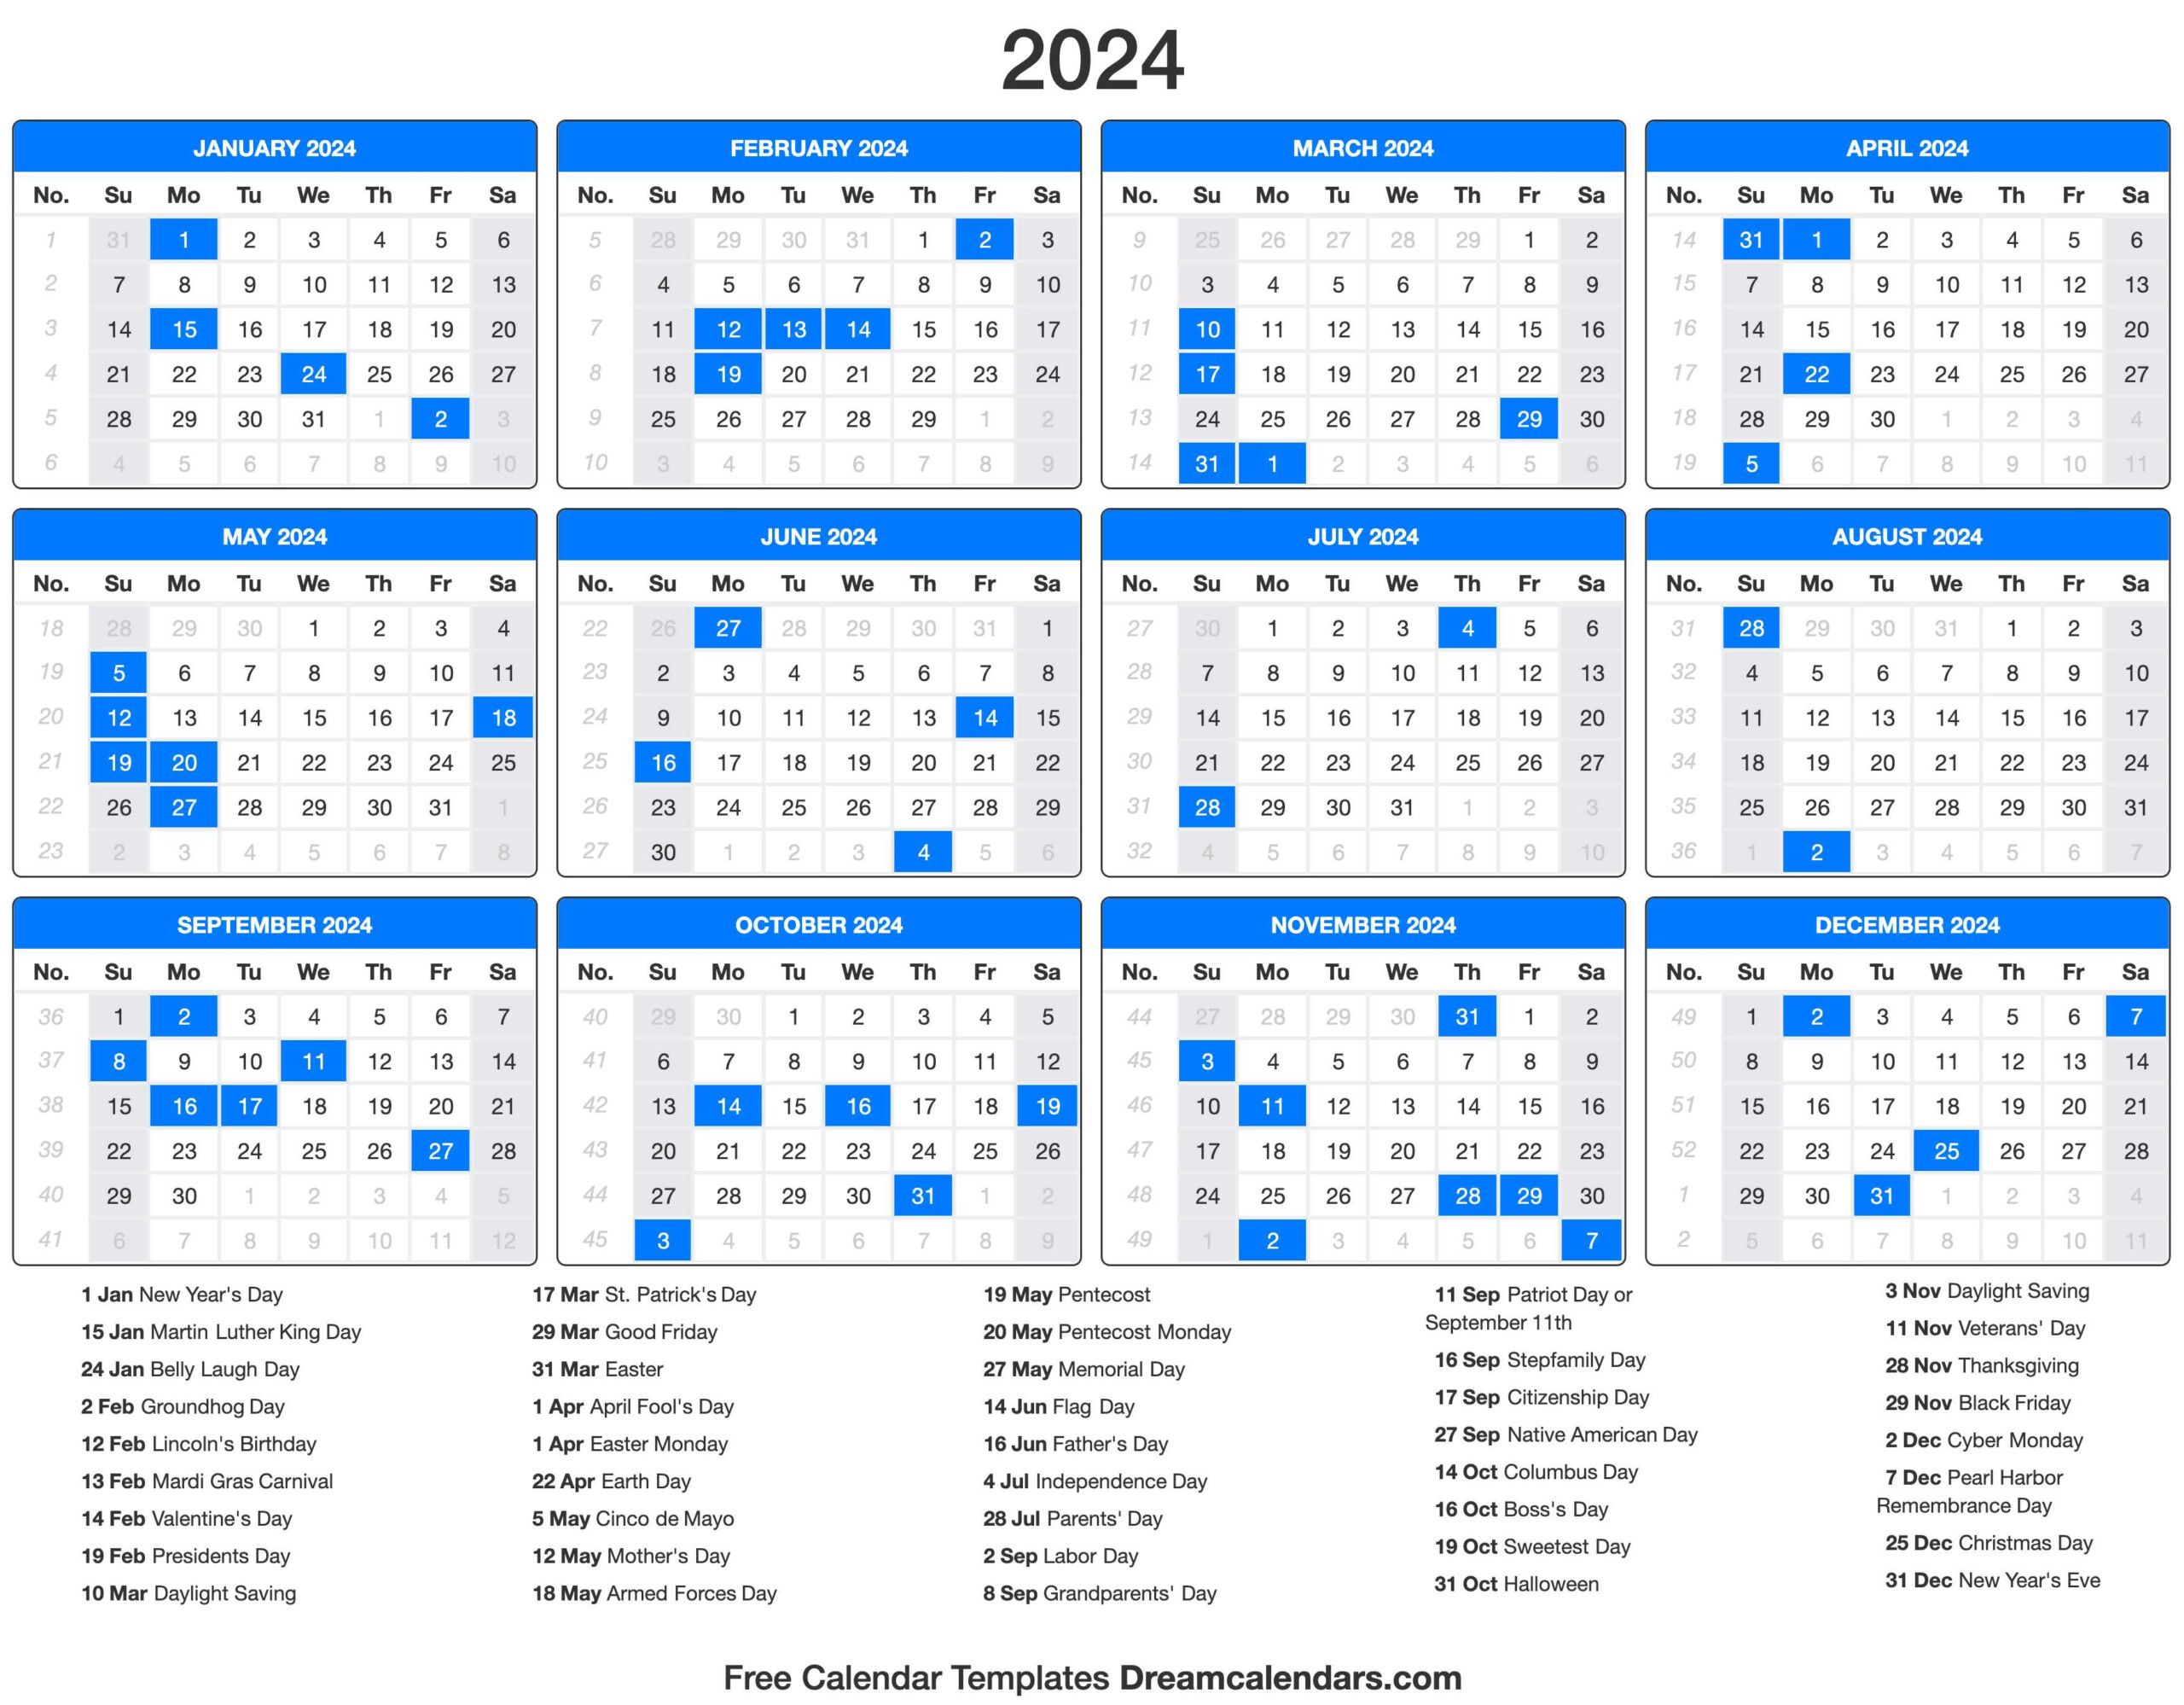 Calendar Of 2024 With Festivals List Sydel Fanechka